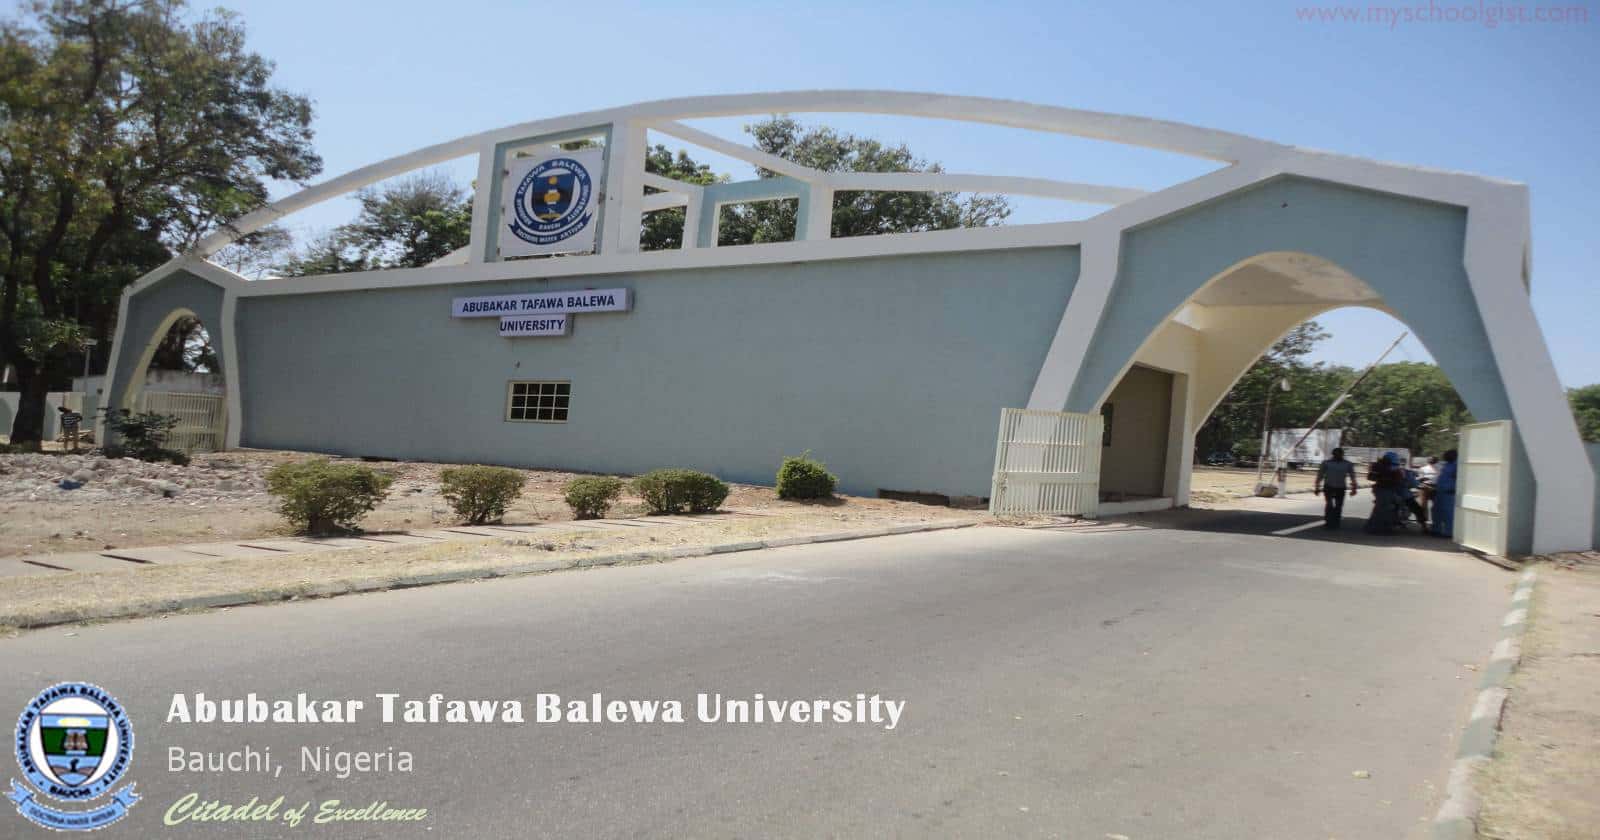 Abubakar Tafawa Balewa University (ATBU) Postgraduate Courses